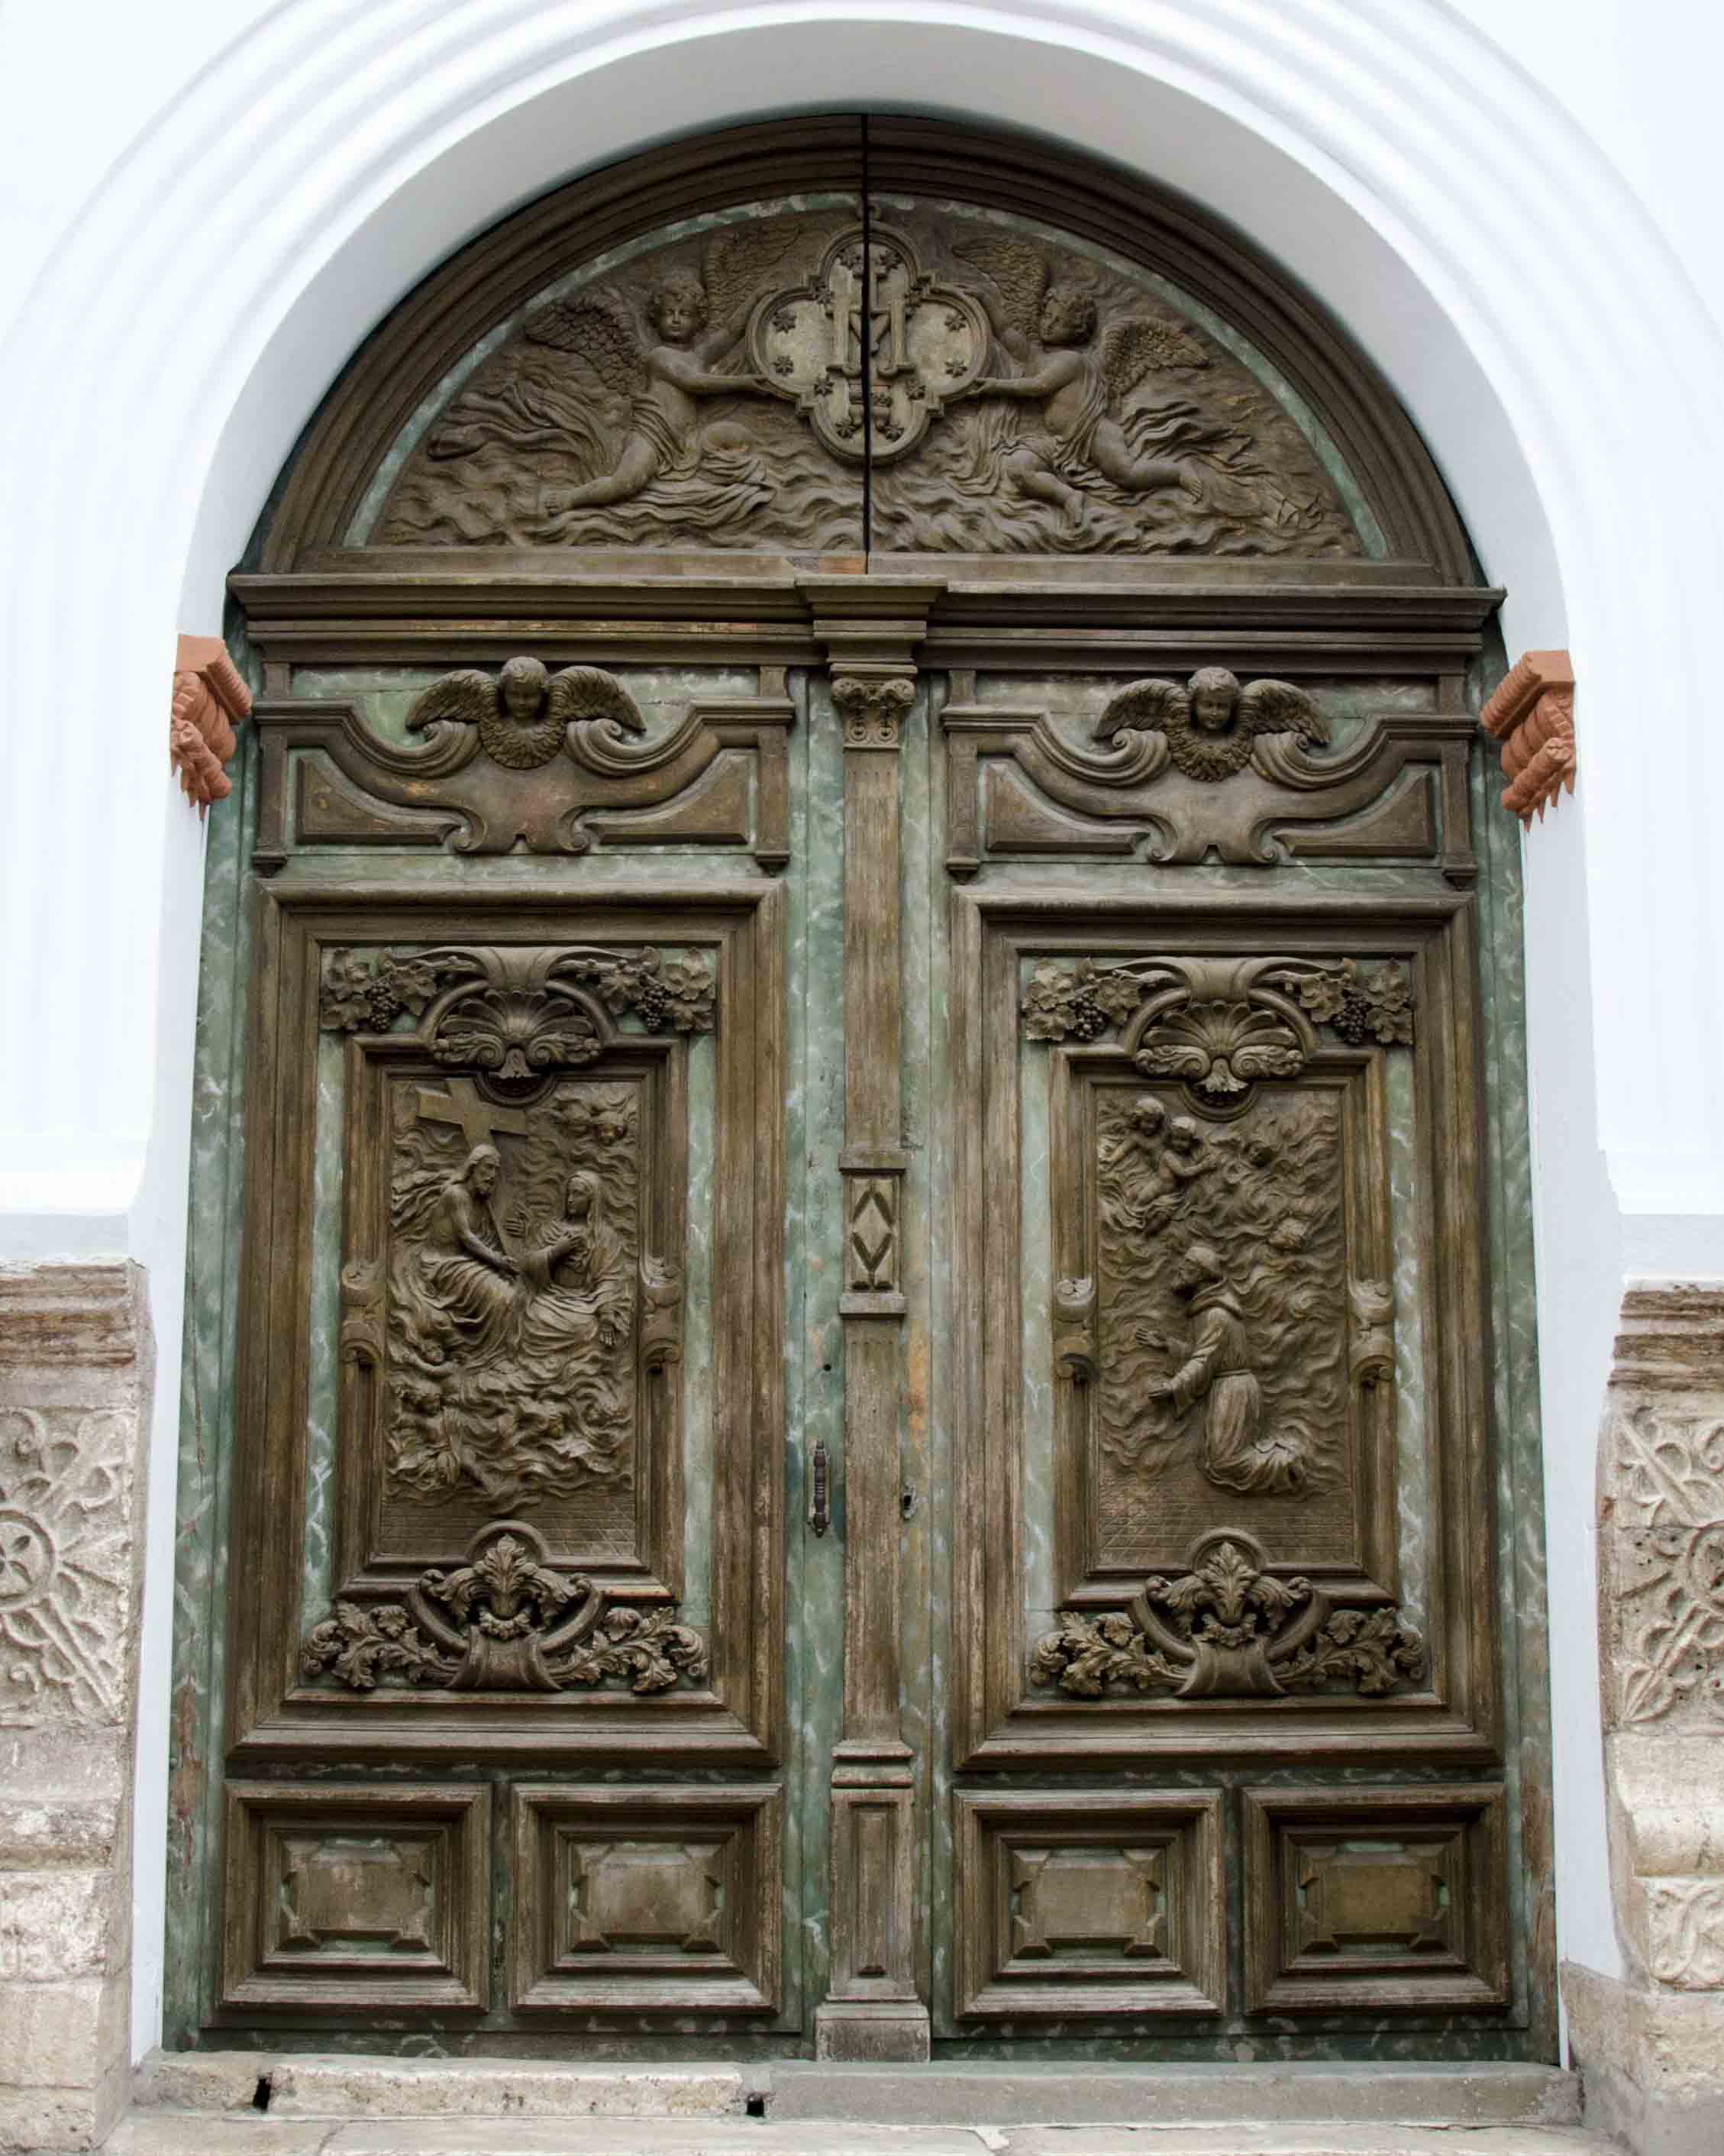 Carved wooden doors, Cuenca, Ecuador